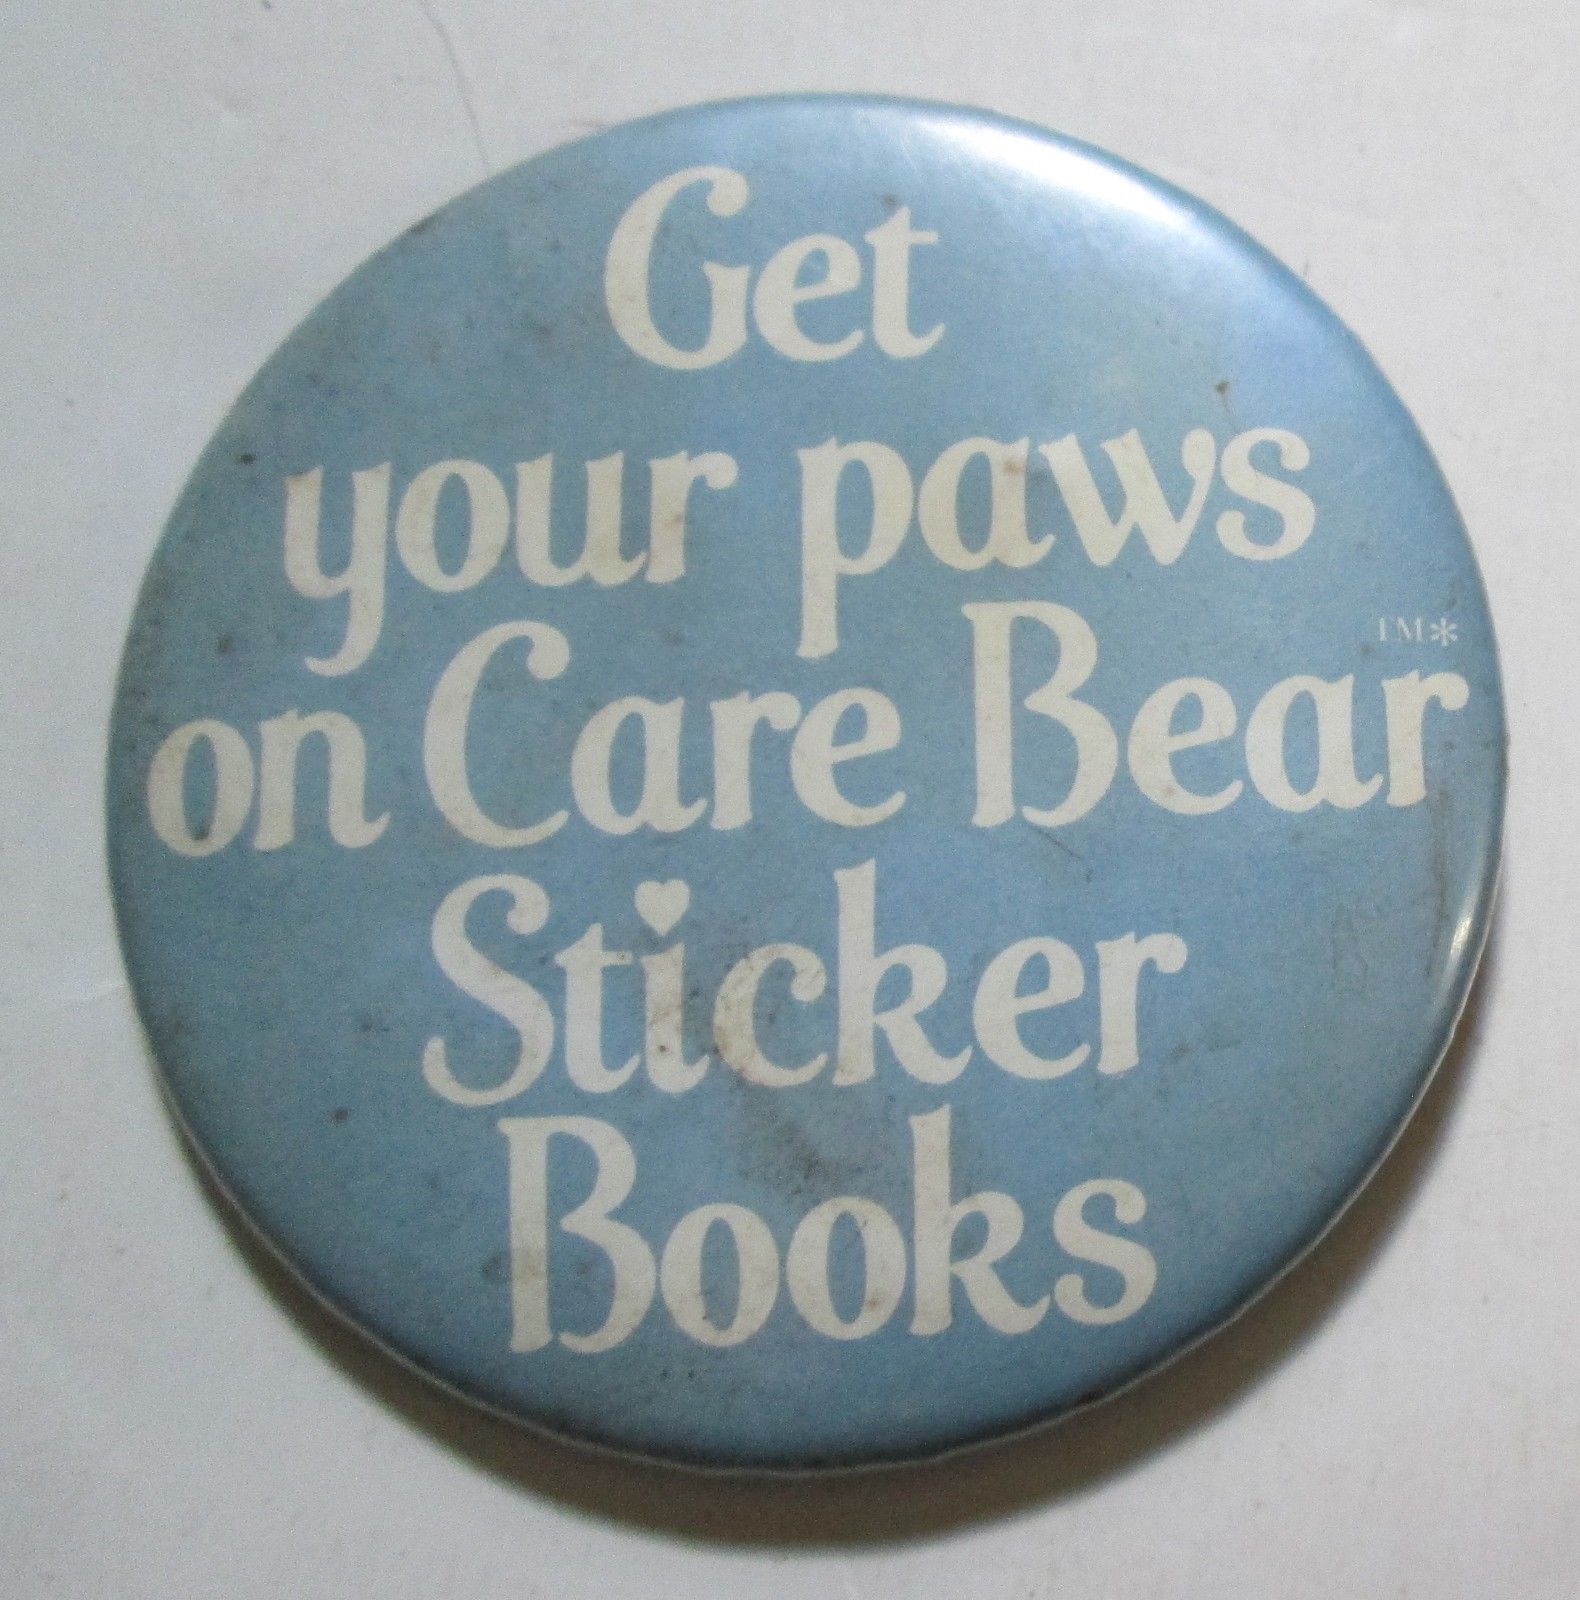 Vintage 1984 Care Bears Sticker Books 3 Inch Pin Button Badge Pizza Hut Promo